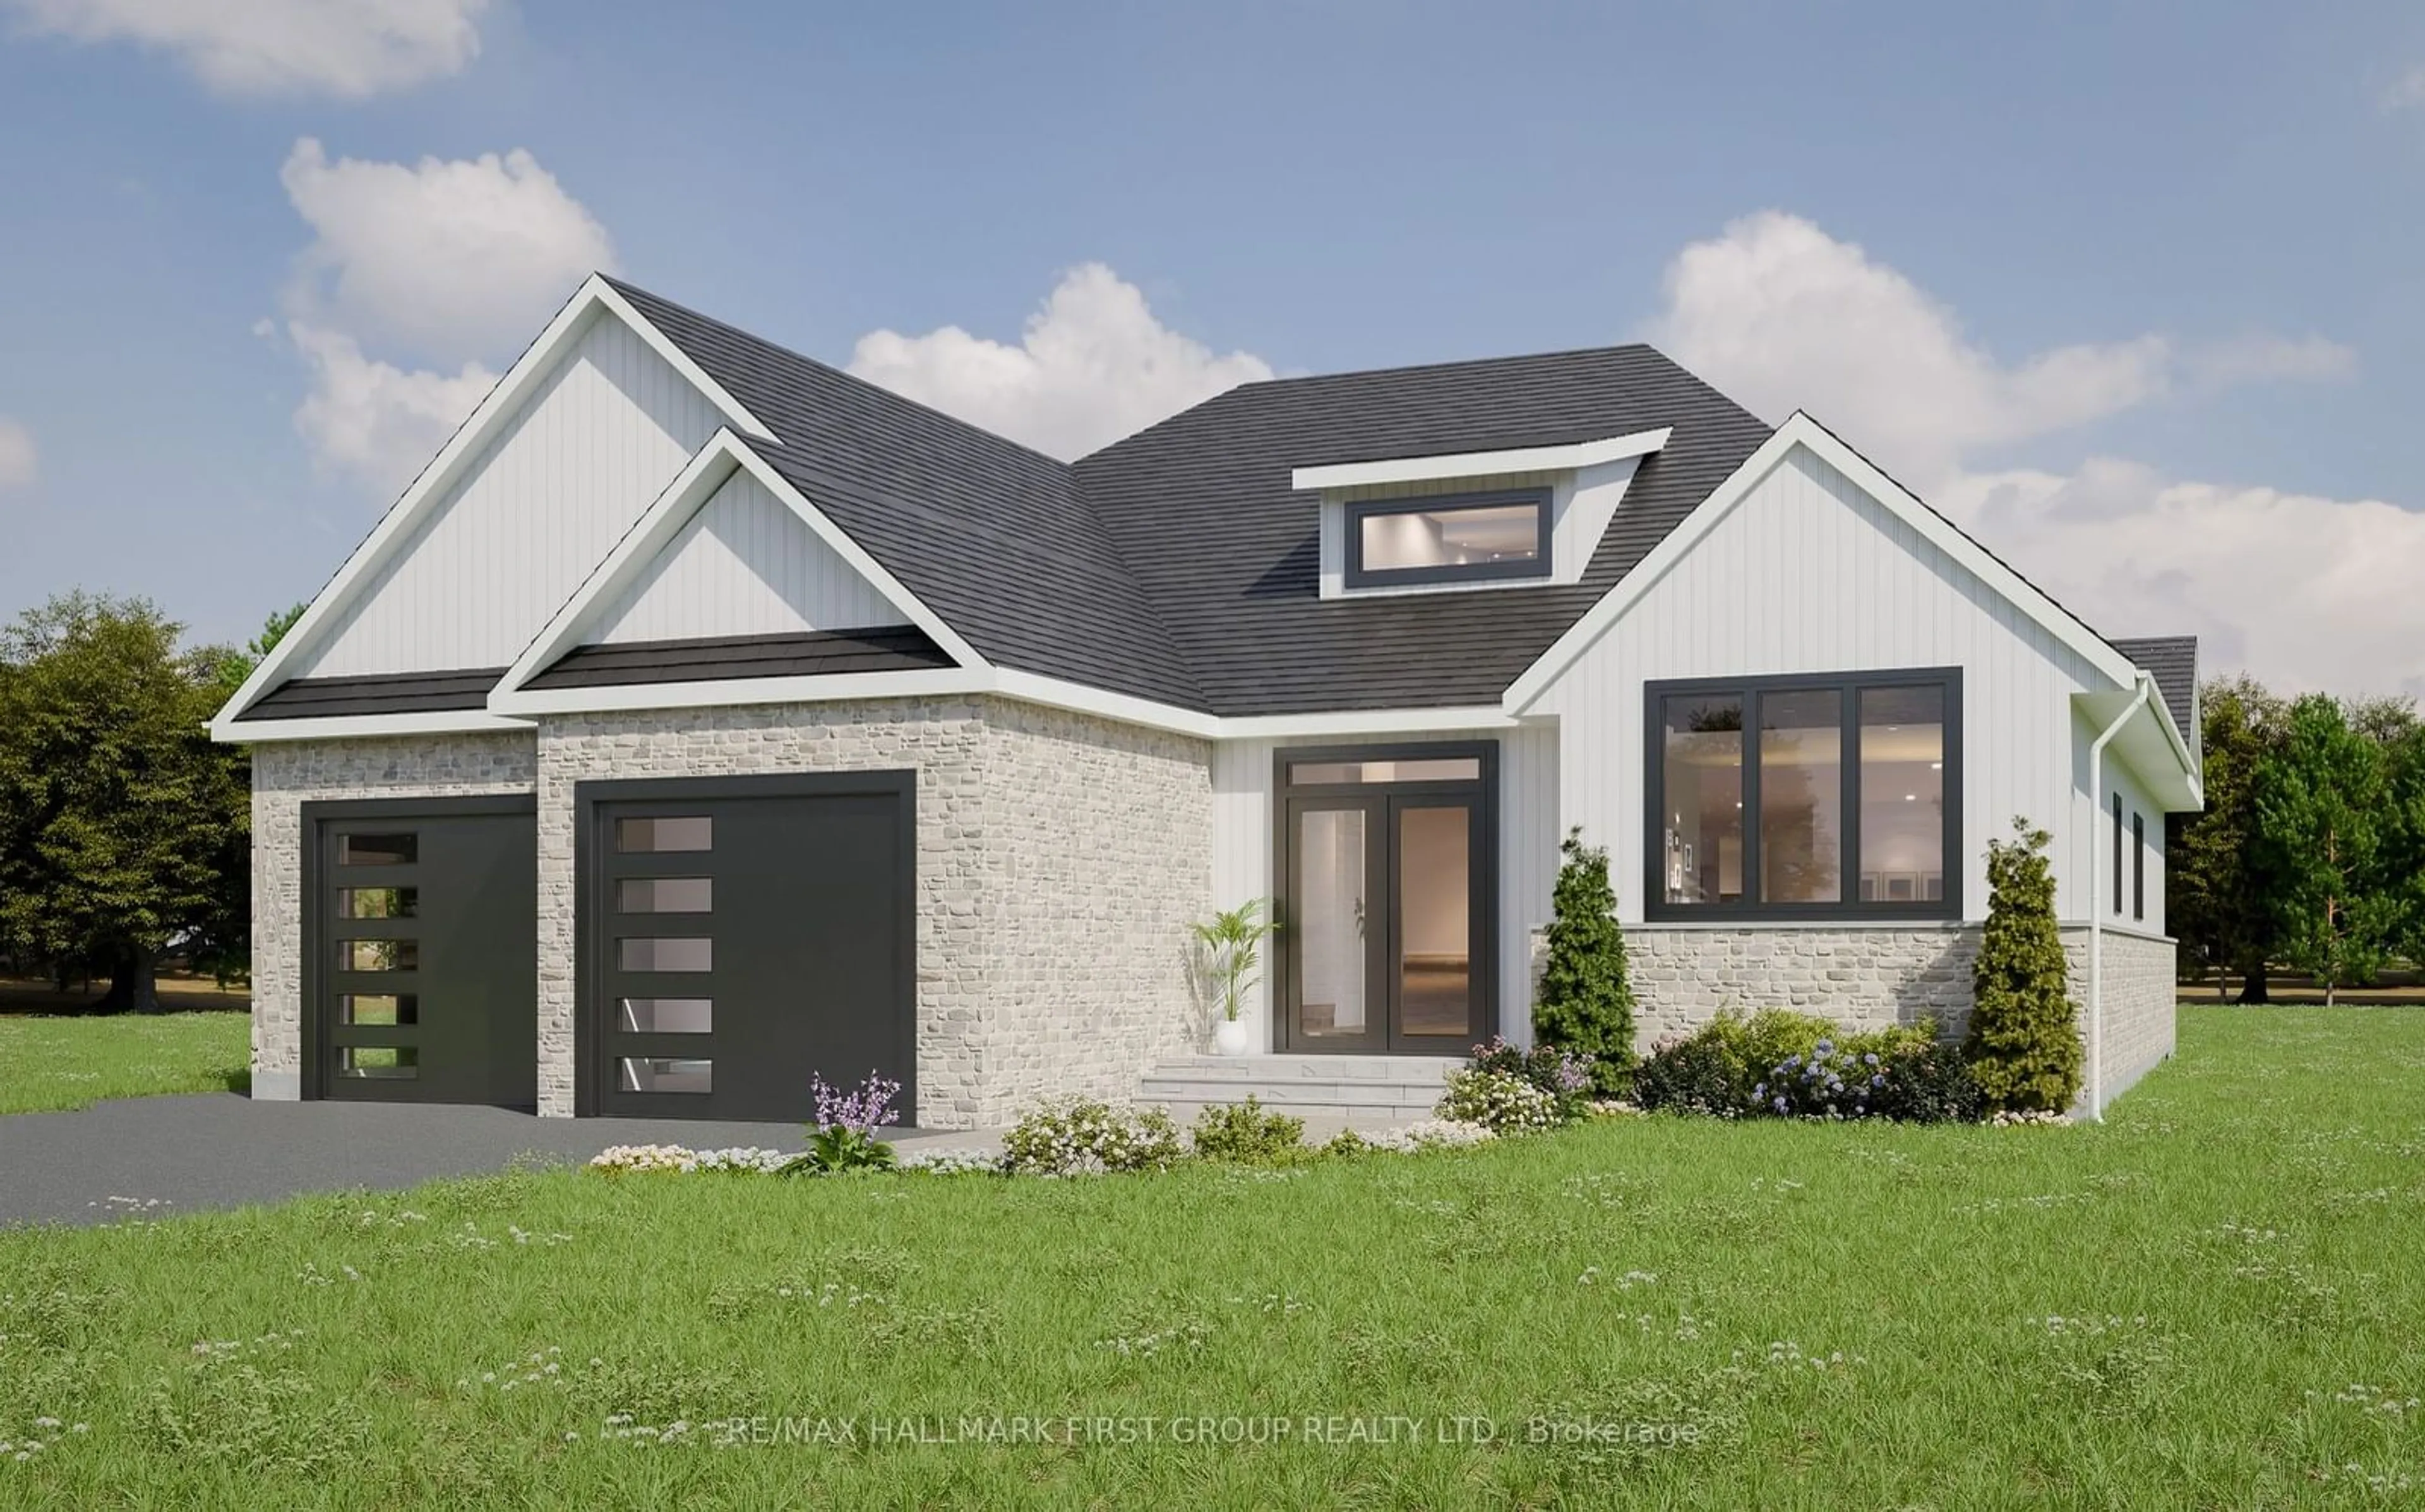 Home with brick exterior material for 182 Ridgeline Dr, Alnwick/Haldimand Ontario K0K 2G0